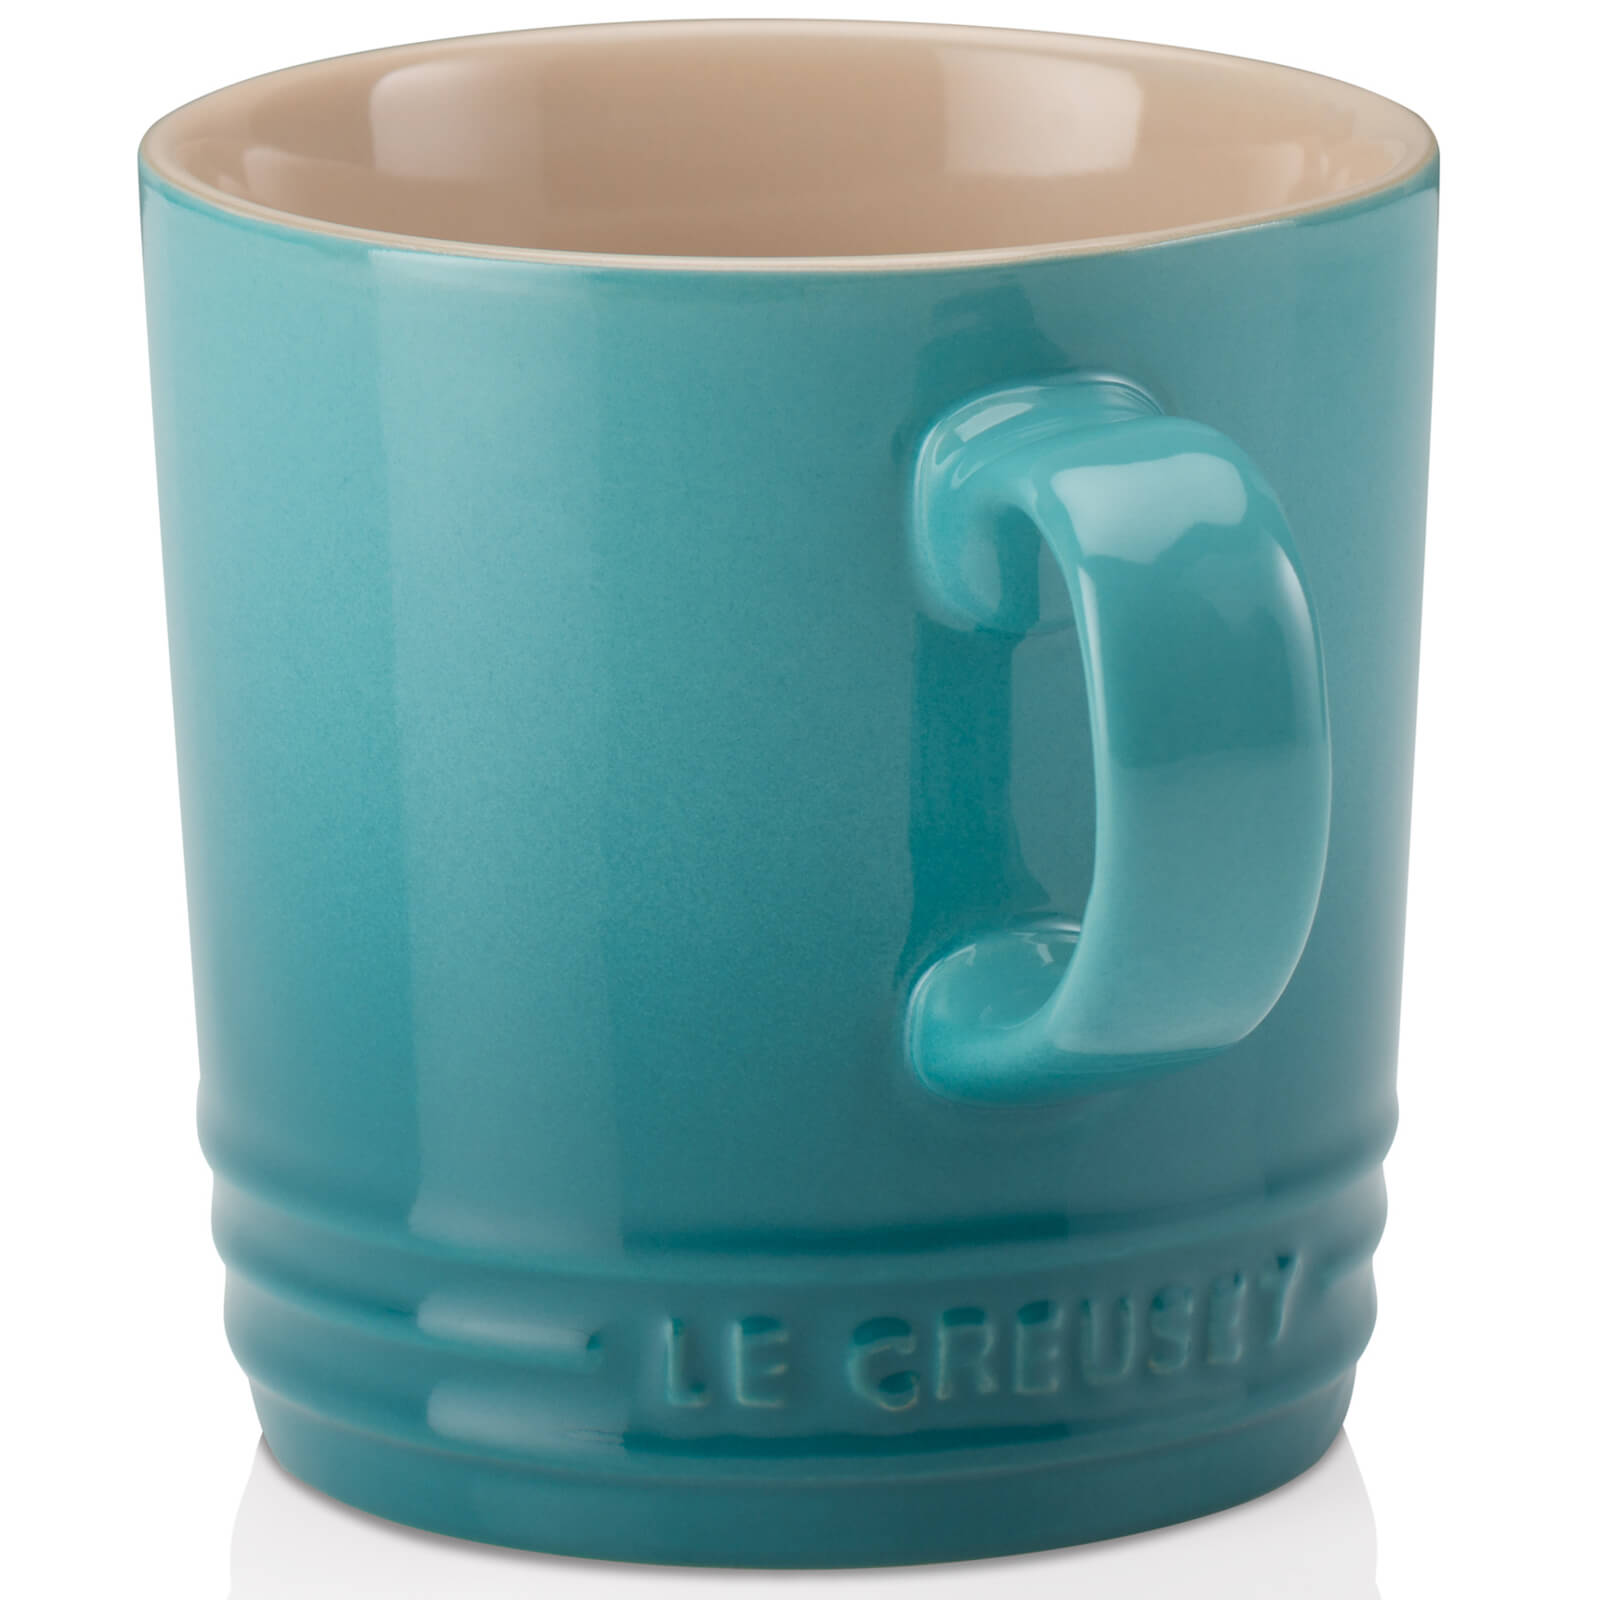 Le Creuset Stoneware Mug - 350ml - Teal von Le Creuset